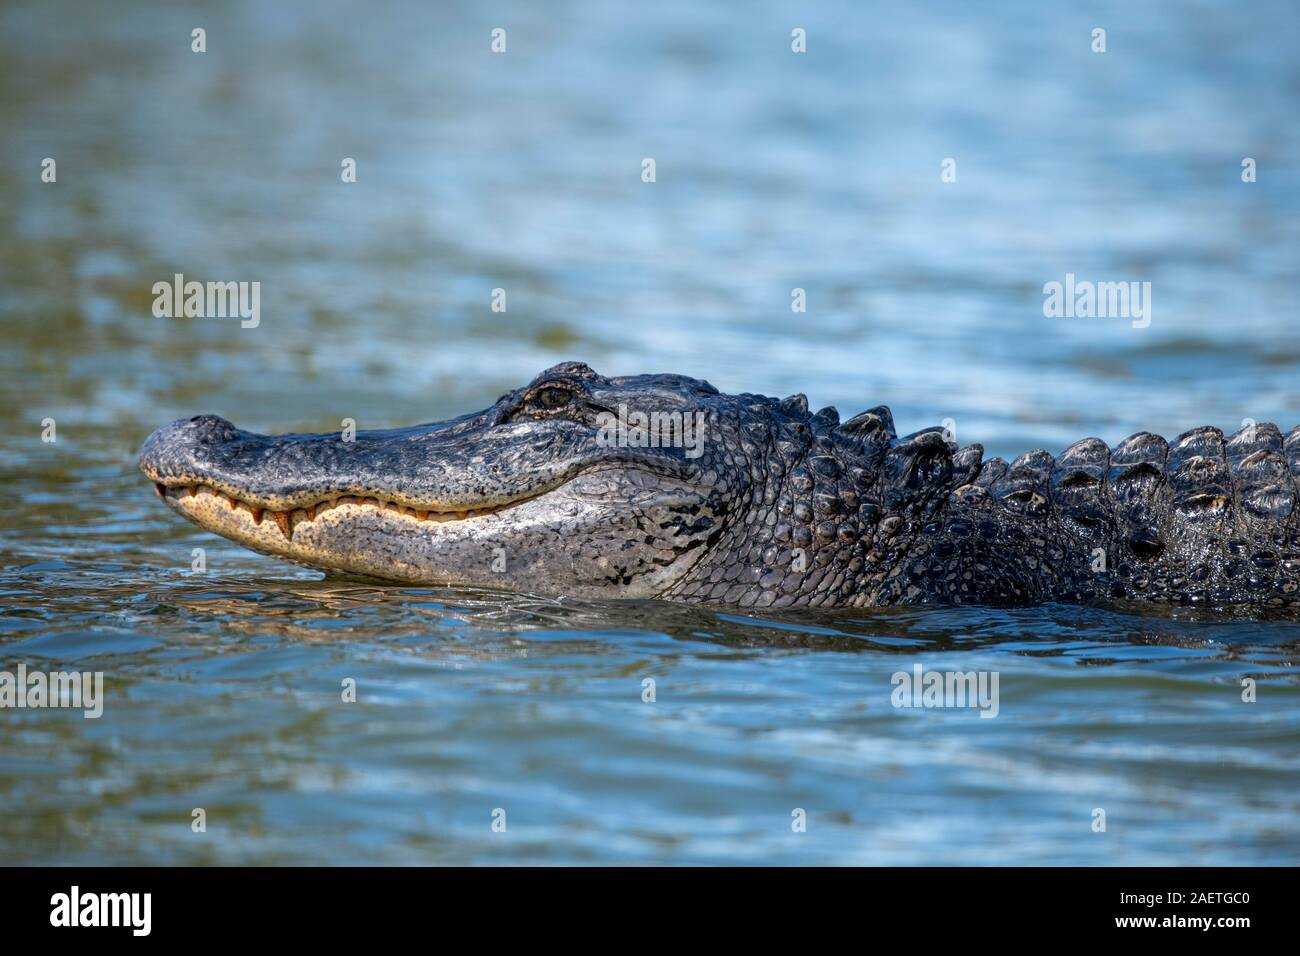 American alligator (Alligator mississippiensis), swimming in water, animal portrait, Atchafalaya Basin, Louisiana, USA Stock Photo